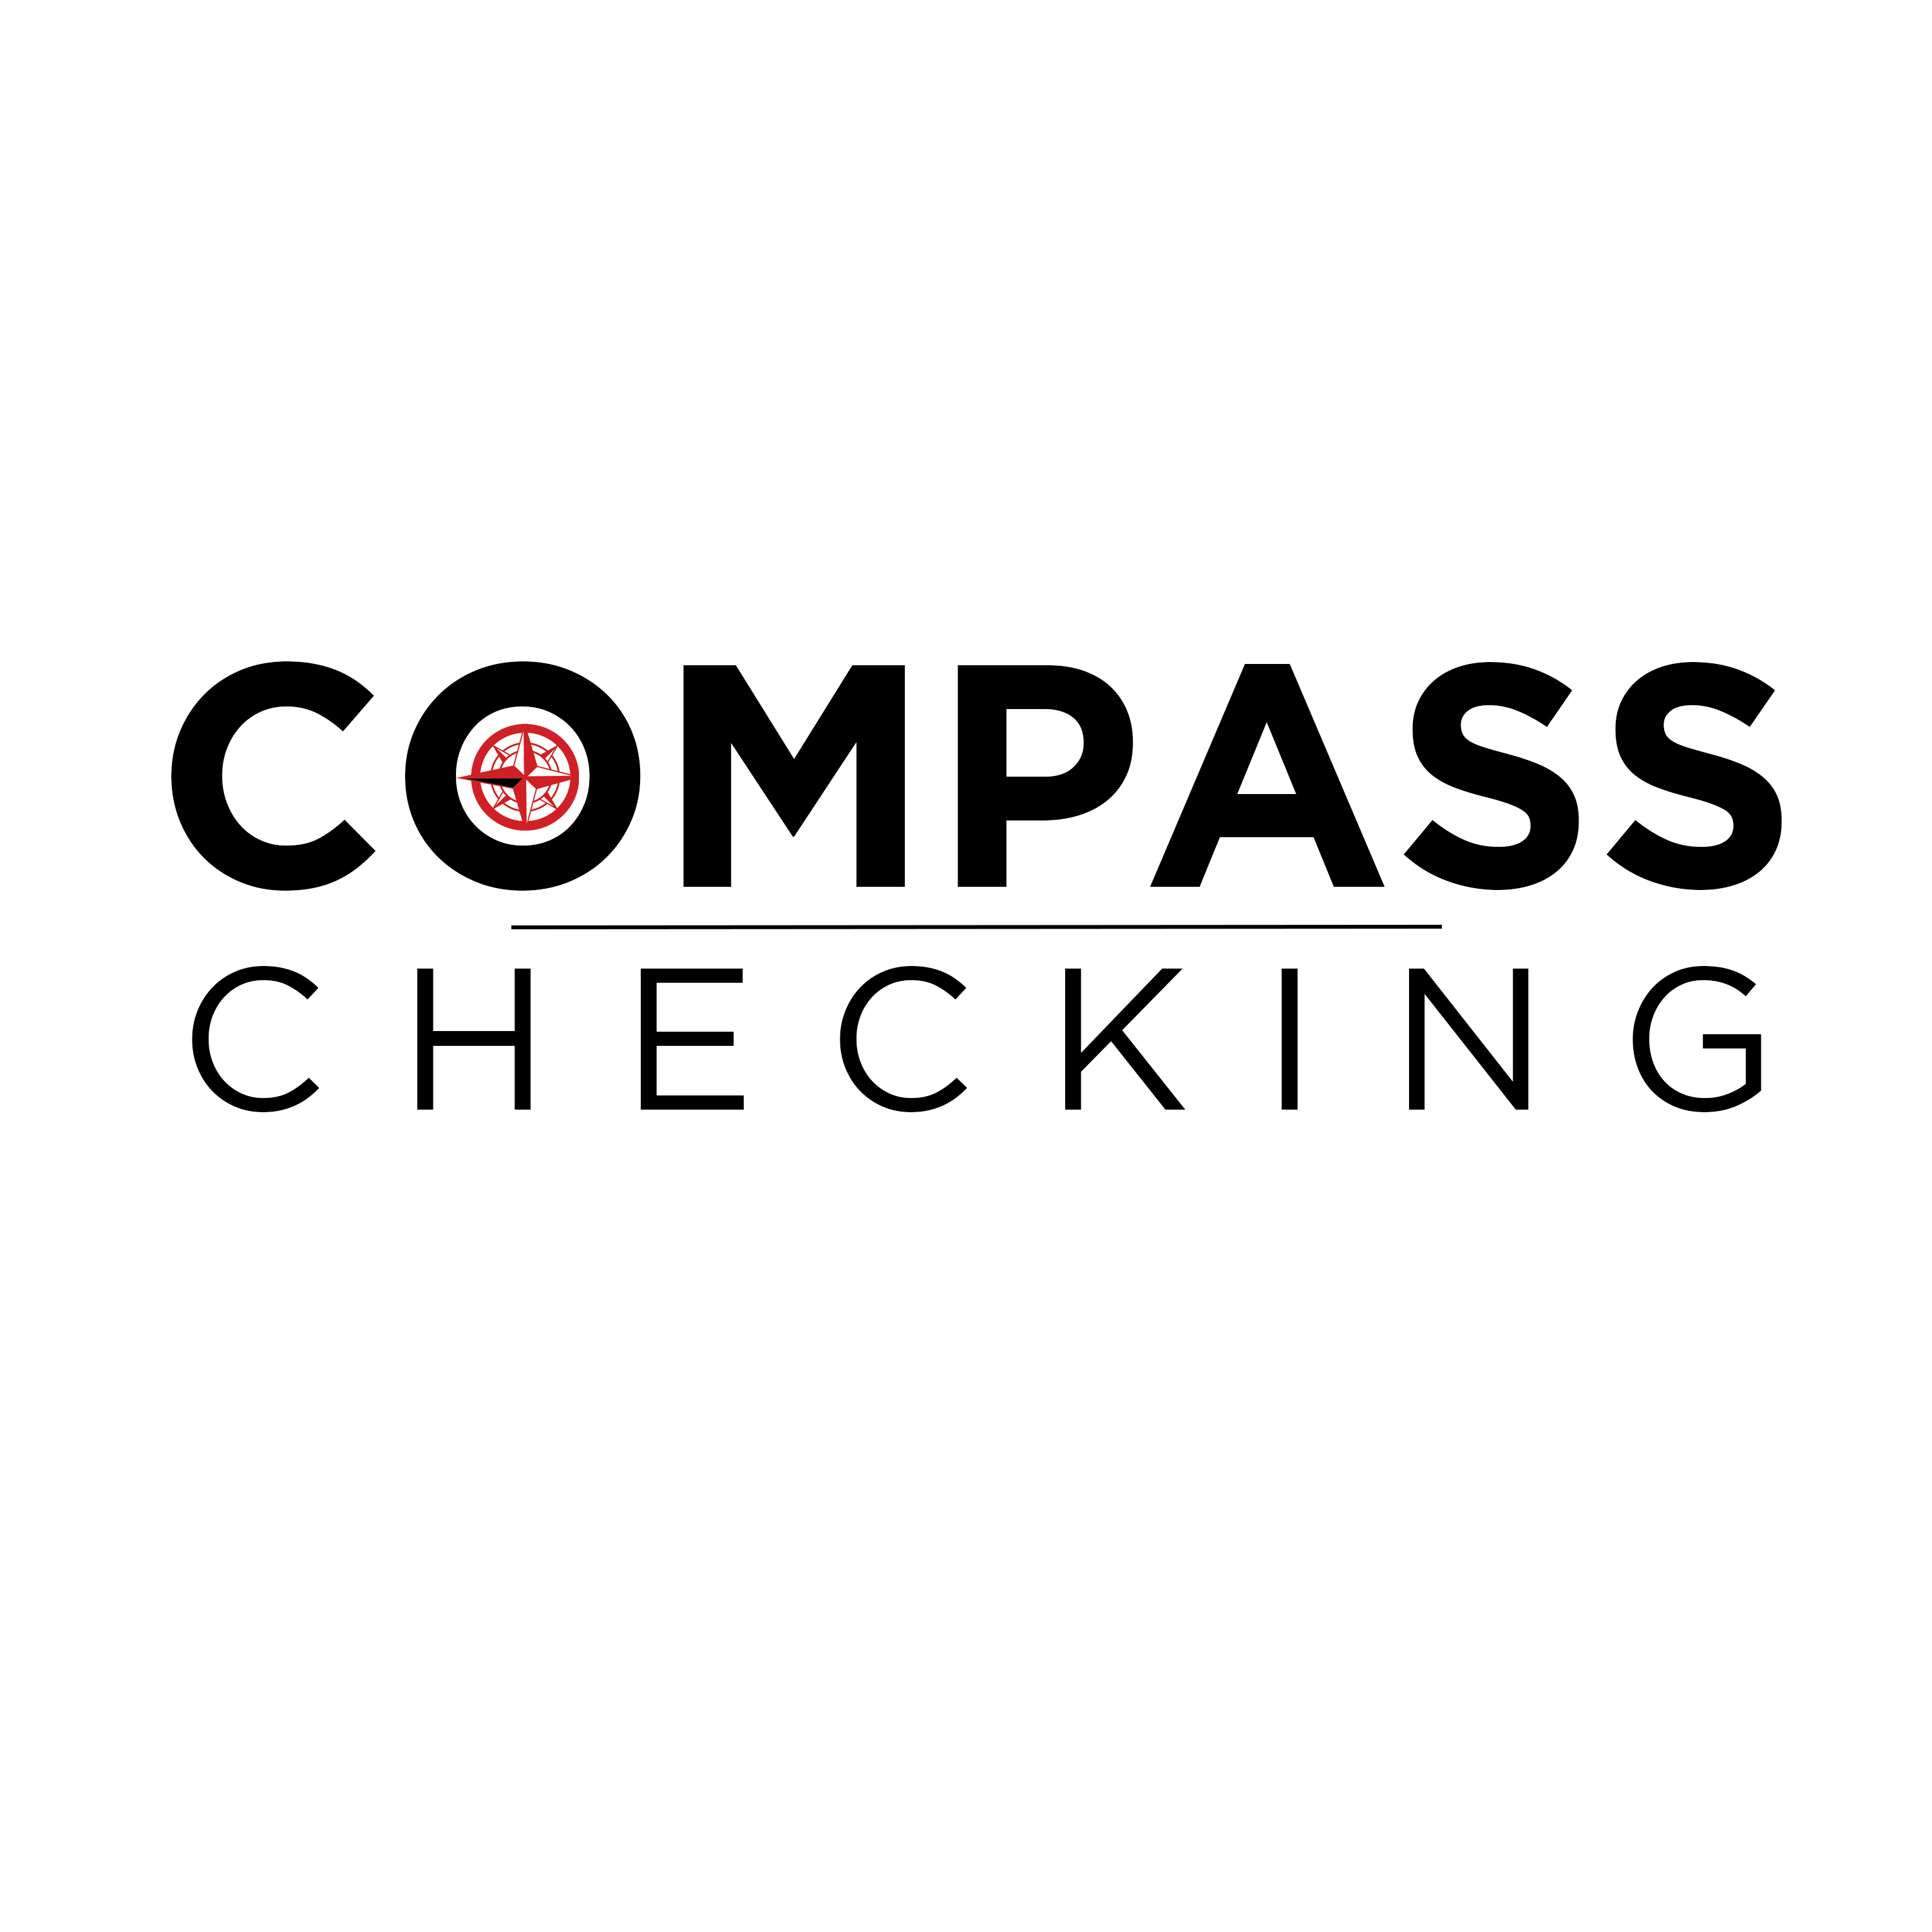 Compass checking logo